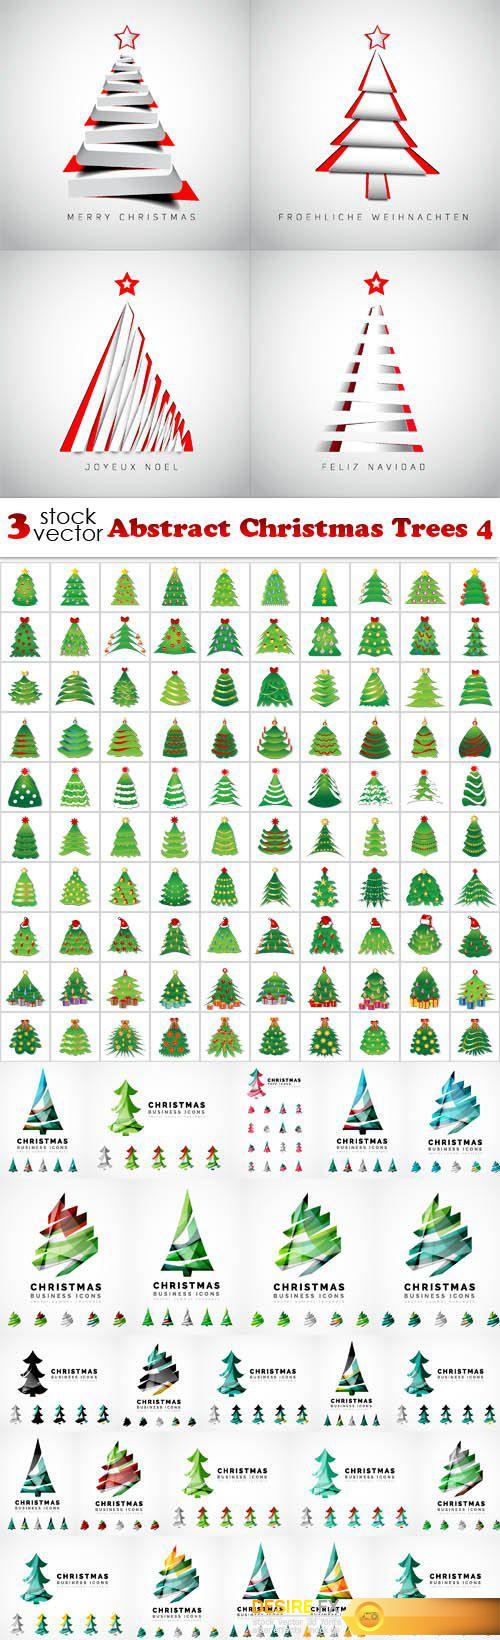 Vectors - Abstract Christmas Trees 4